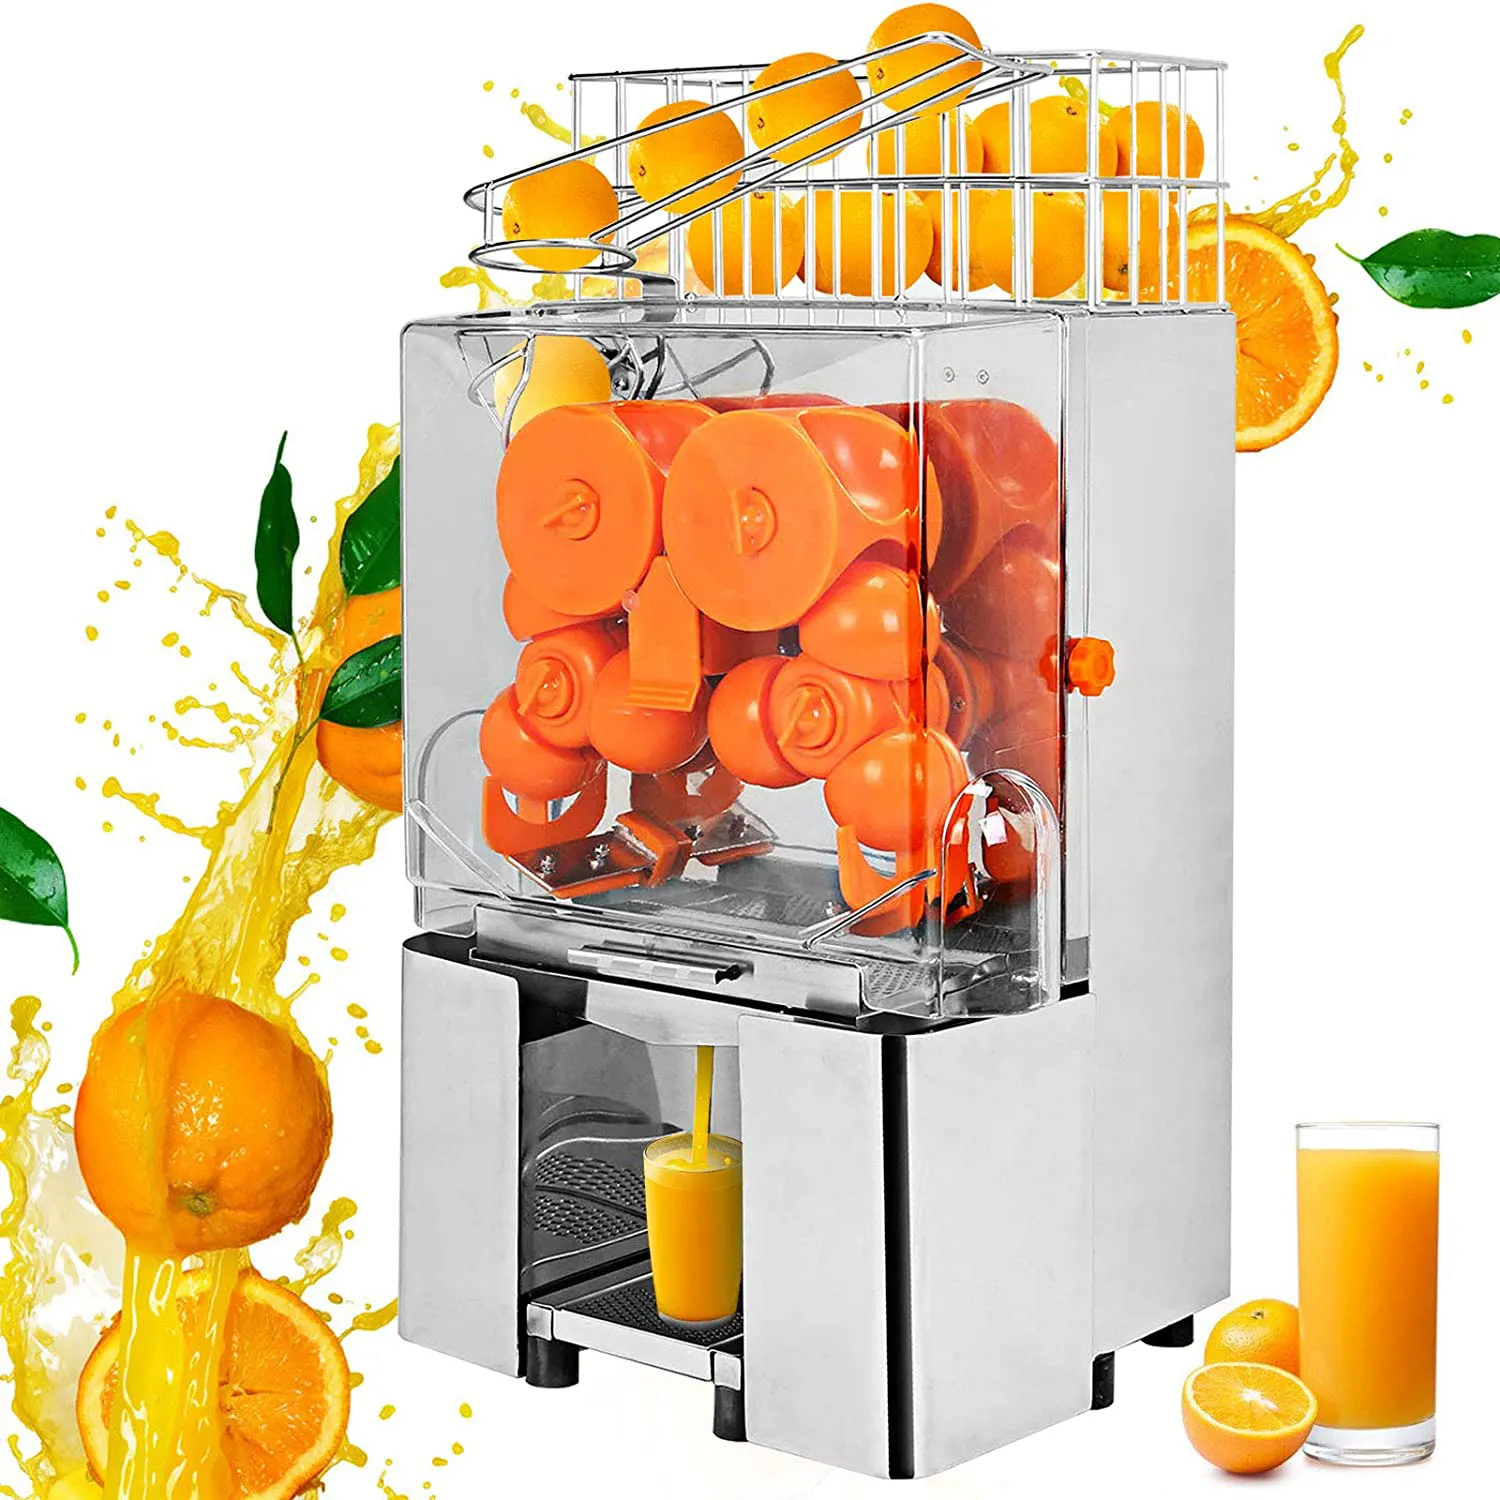 Machine à jus de fruits frais grenade orange citron